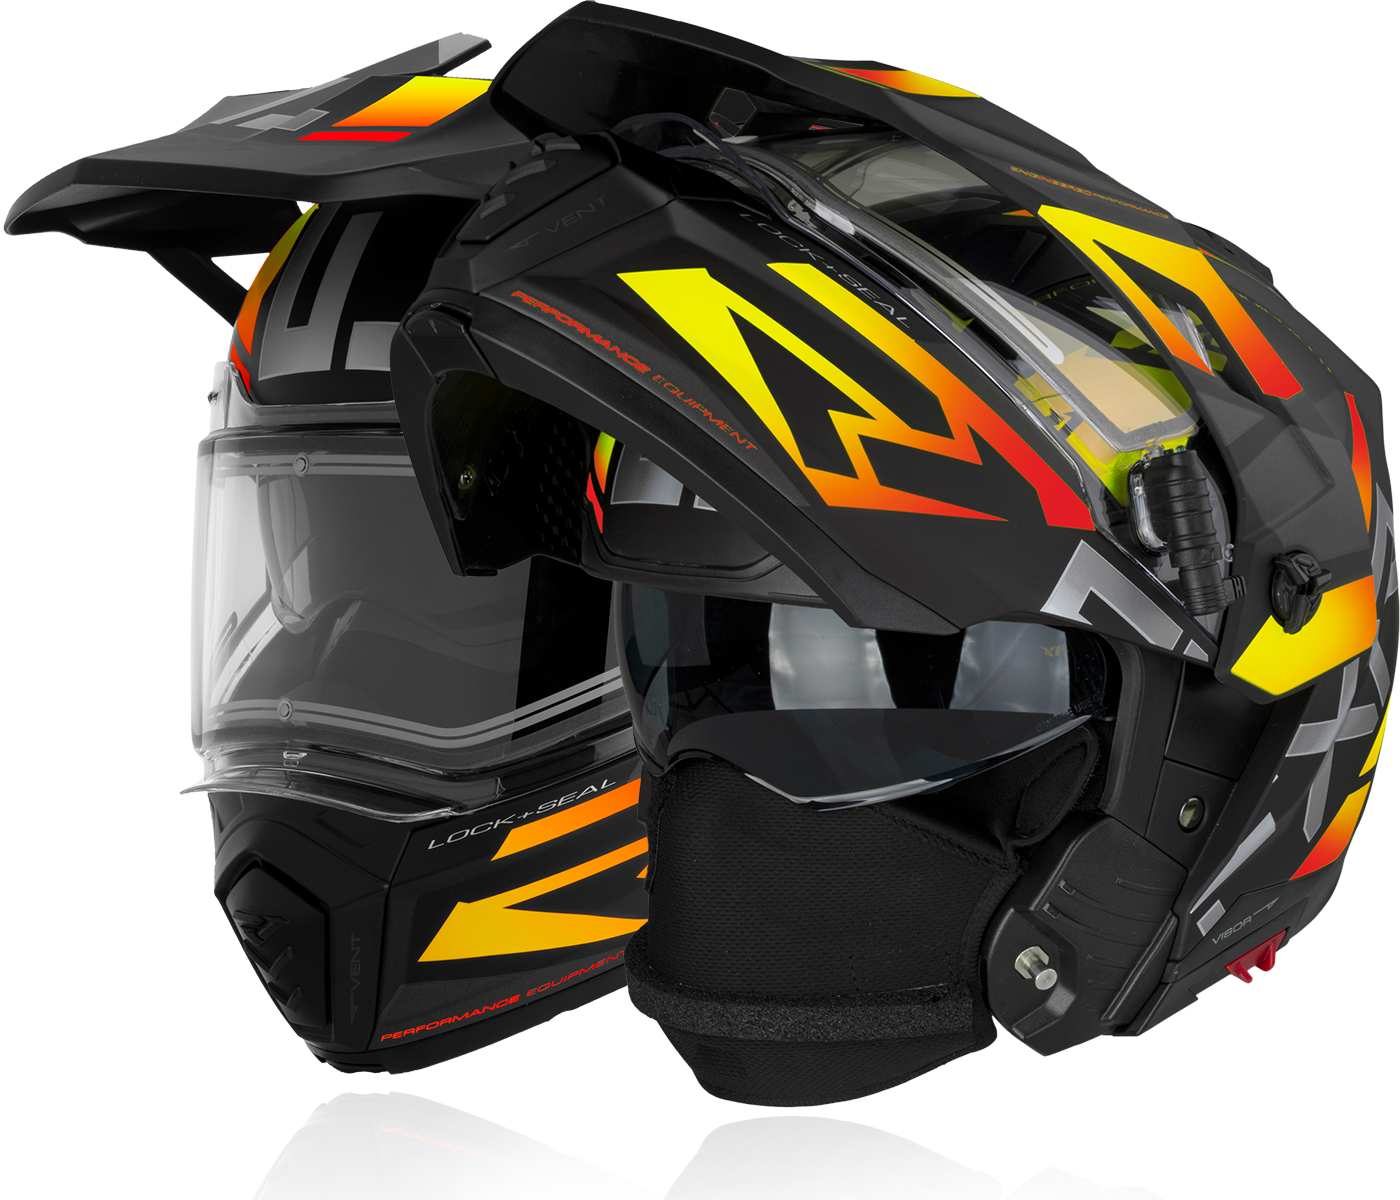 A front view image of FXR's Maverick X black orange colorway helmet